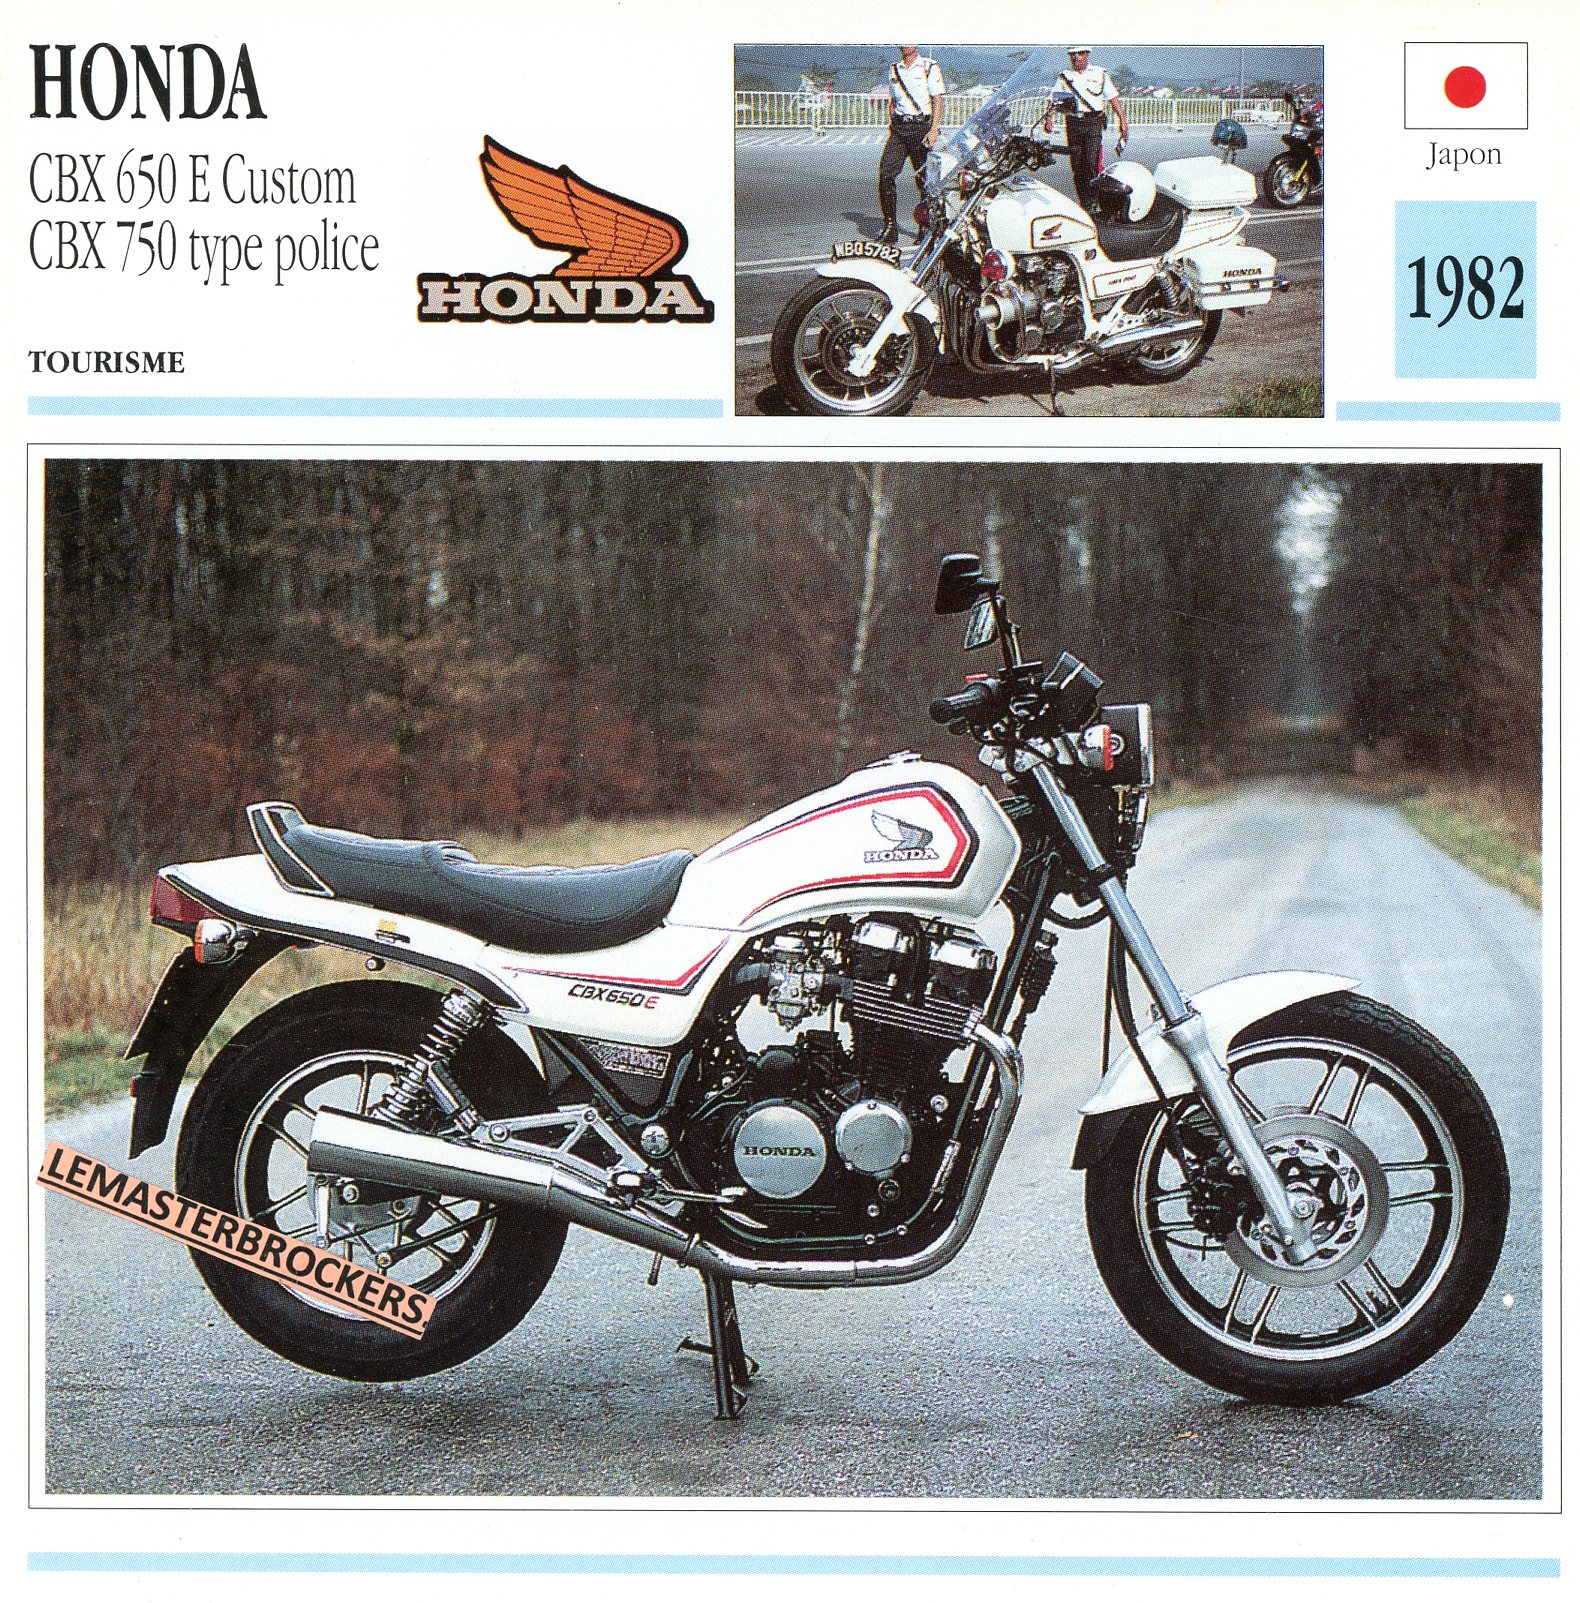 FICHE-MOTO-HONDA-CBX-CBX750-POLICE-CB650-1982-LEMASTERBROCKERS-CARS-MOTORCYCLE